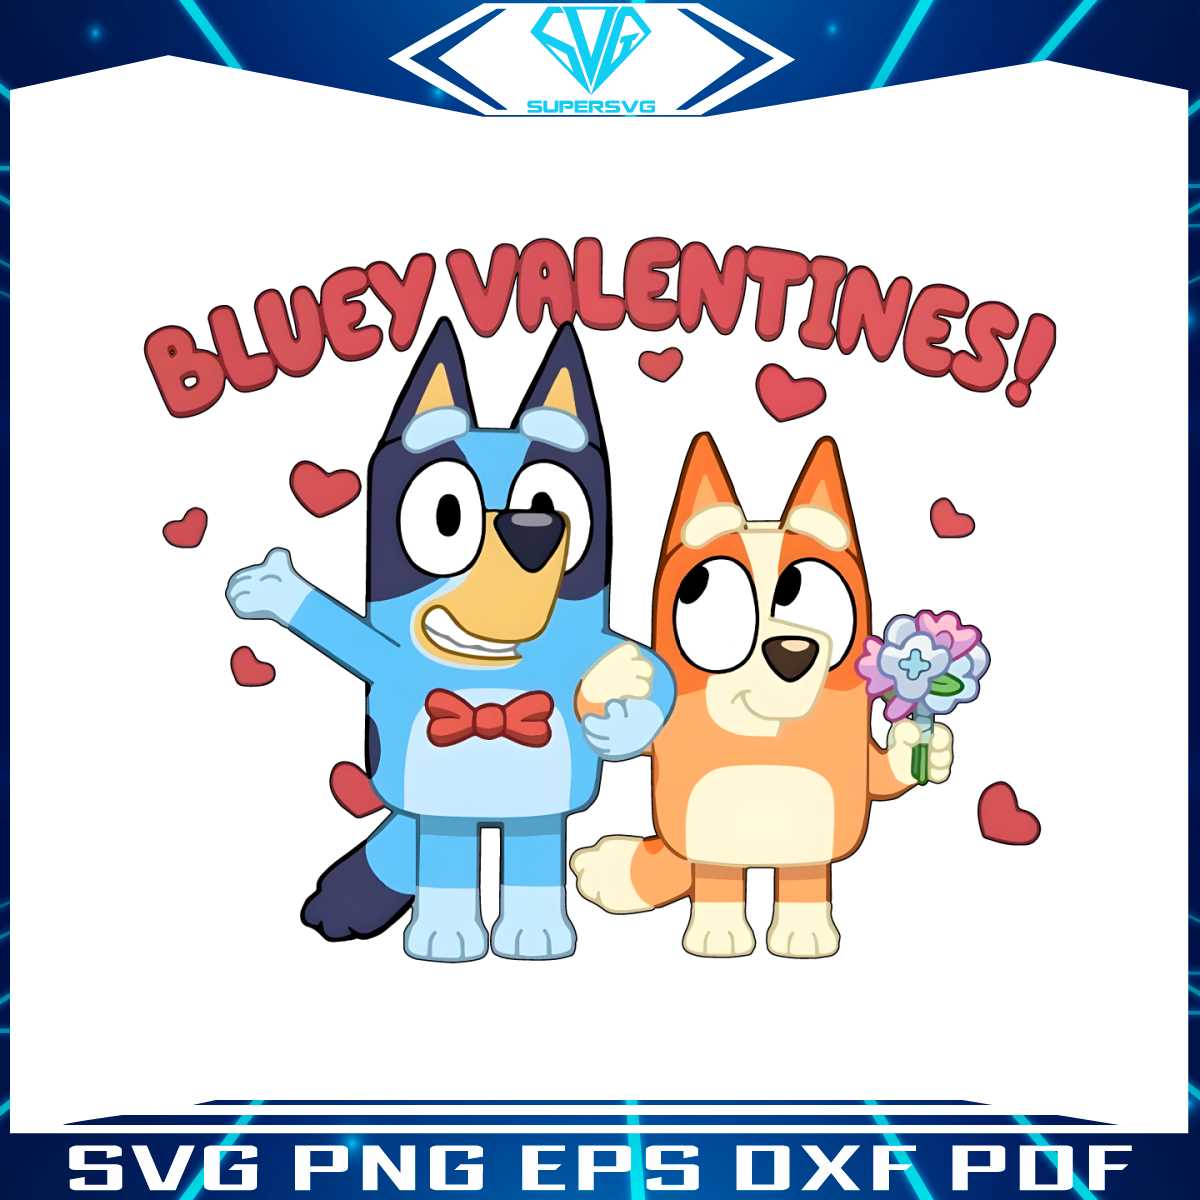 happy-bluey-valentines-couple-png